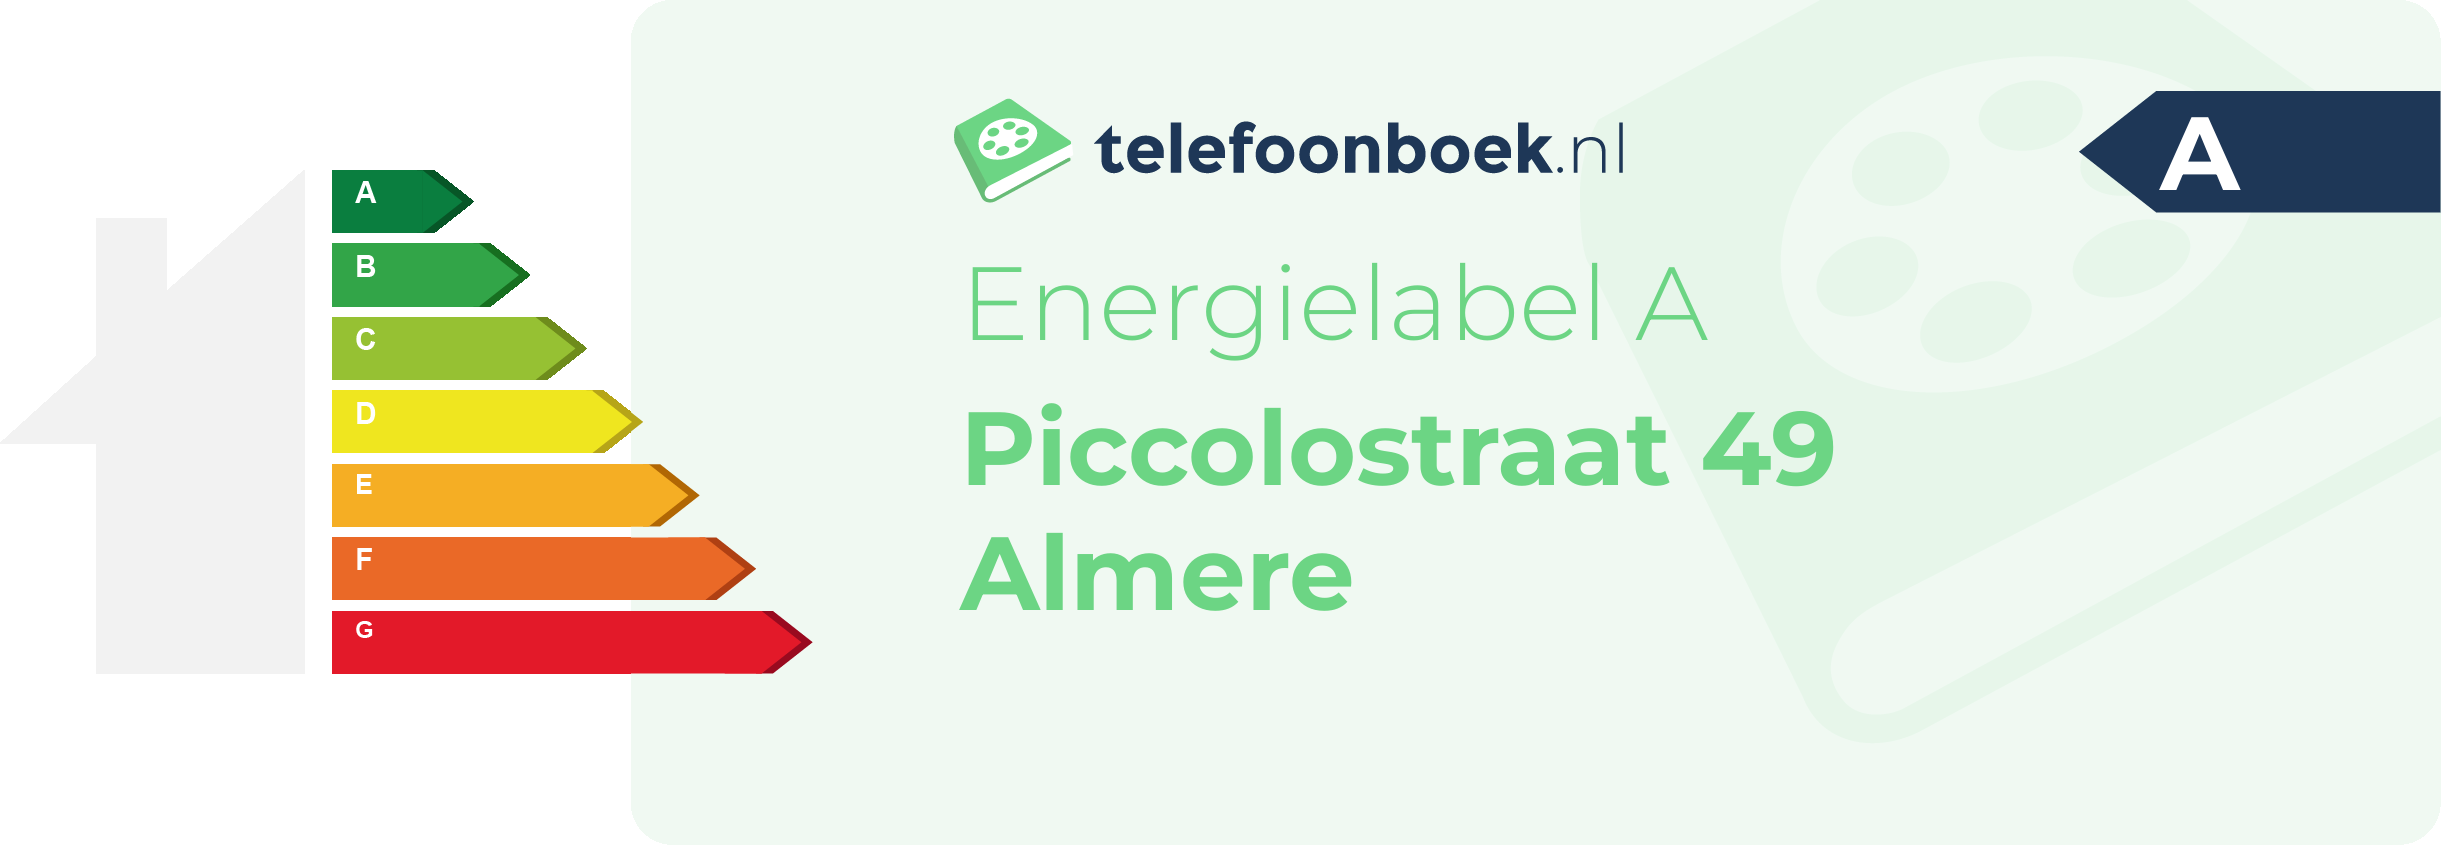 Energielabel Piccolostraat 49 Almere